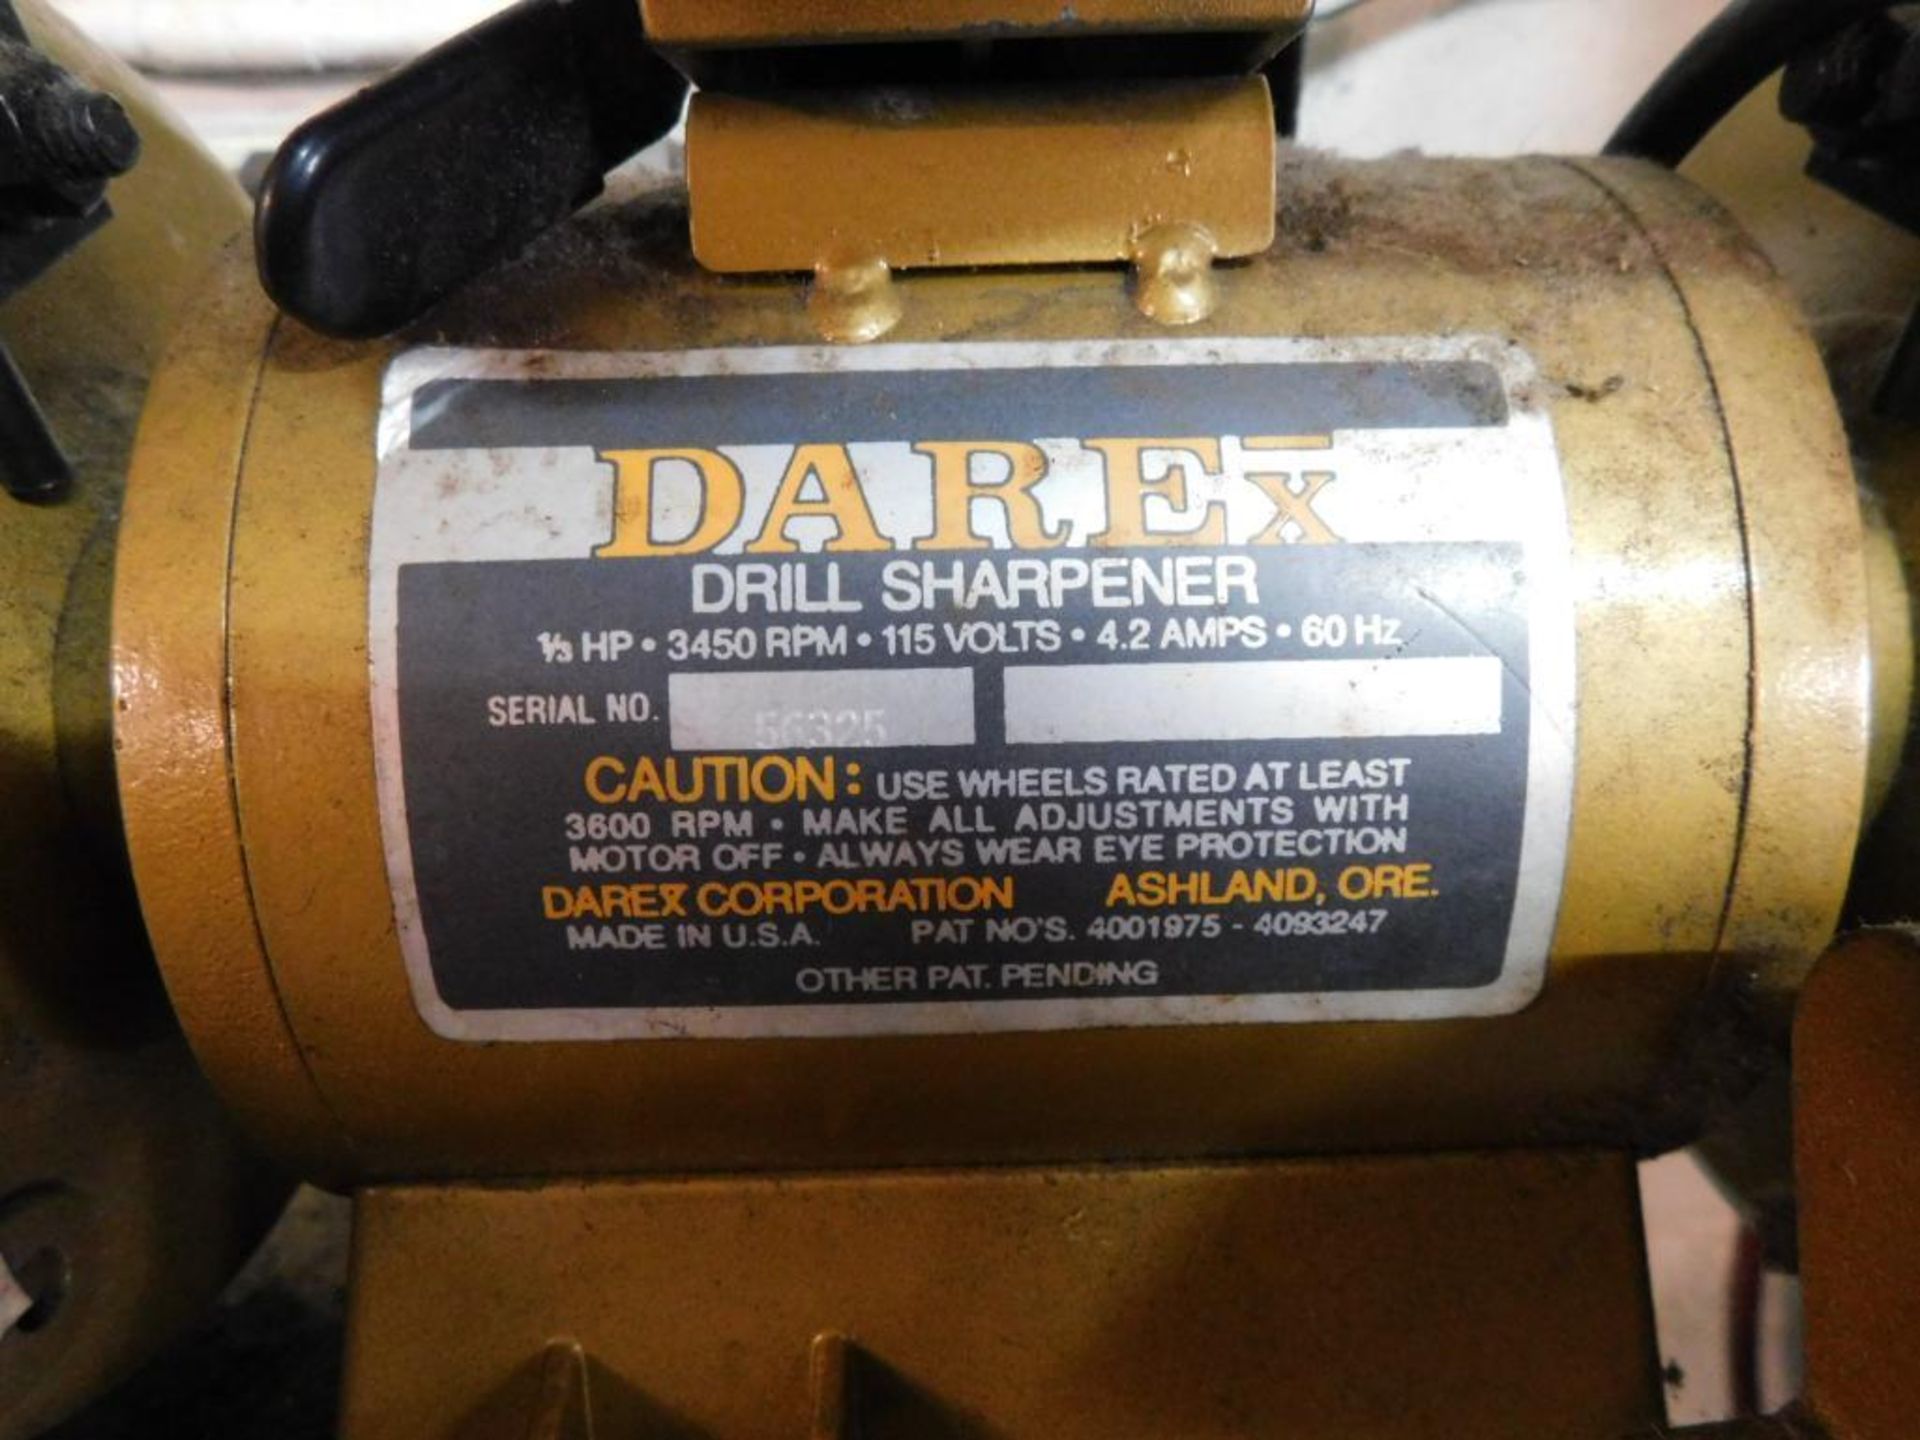 Darex M5 1/3 HP Pedestal Drill Sharpener, S/N 56325 - Image 8 of 8